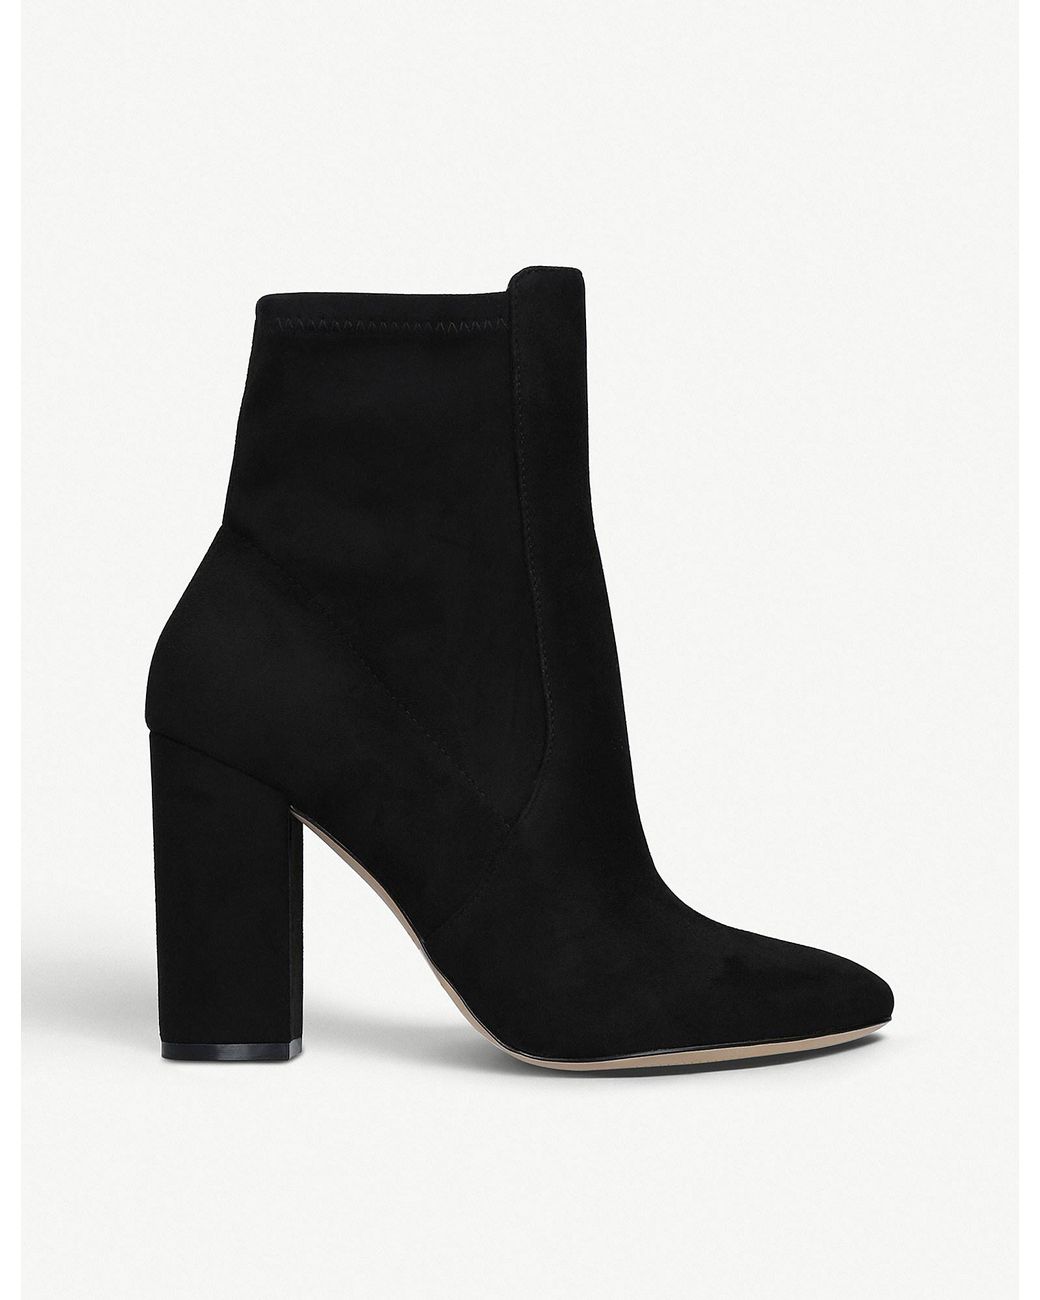 ALDO 'aurella' Ankle Boots in Black | Lyst